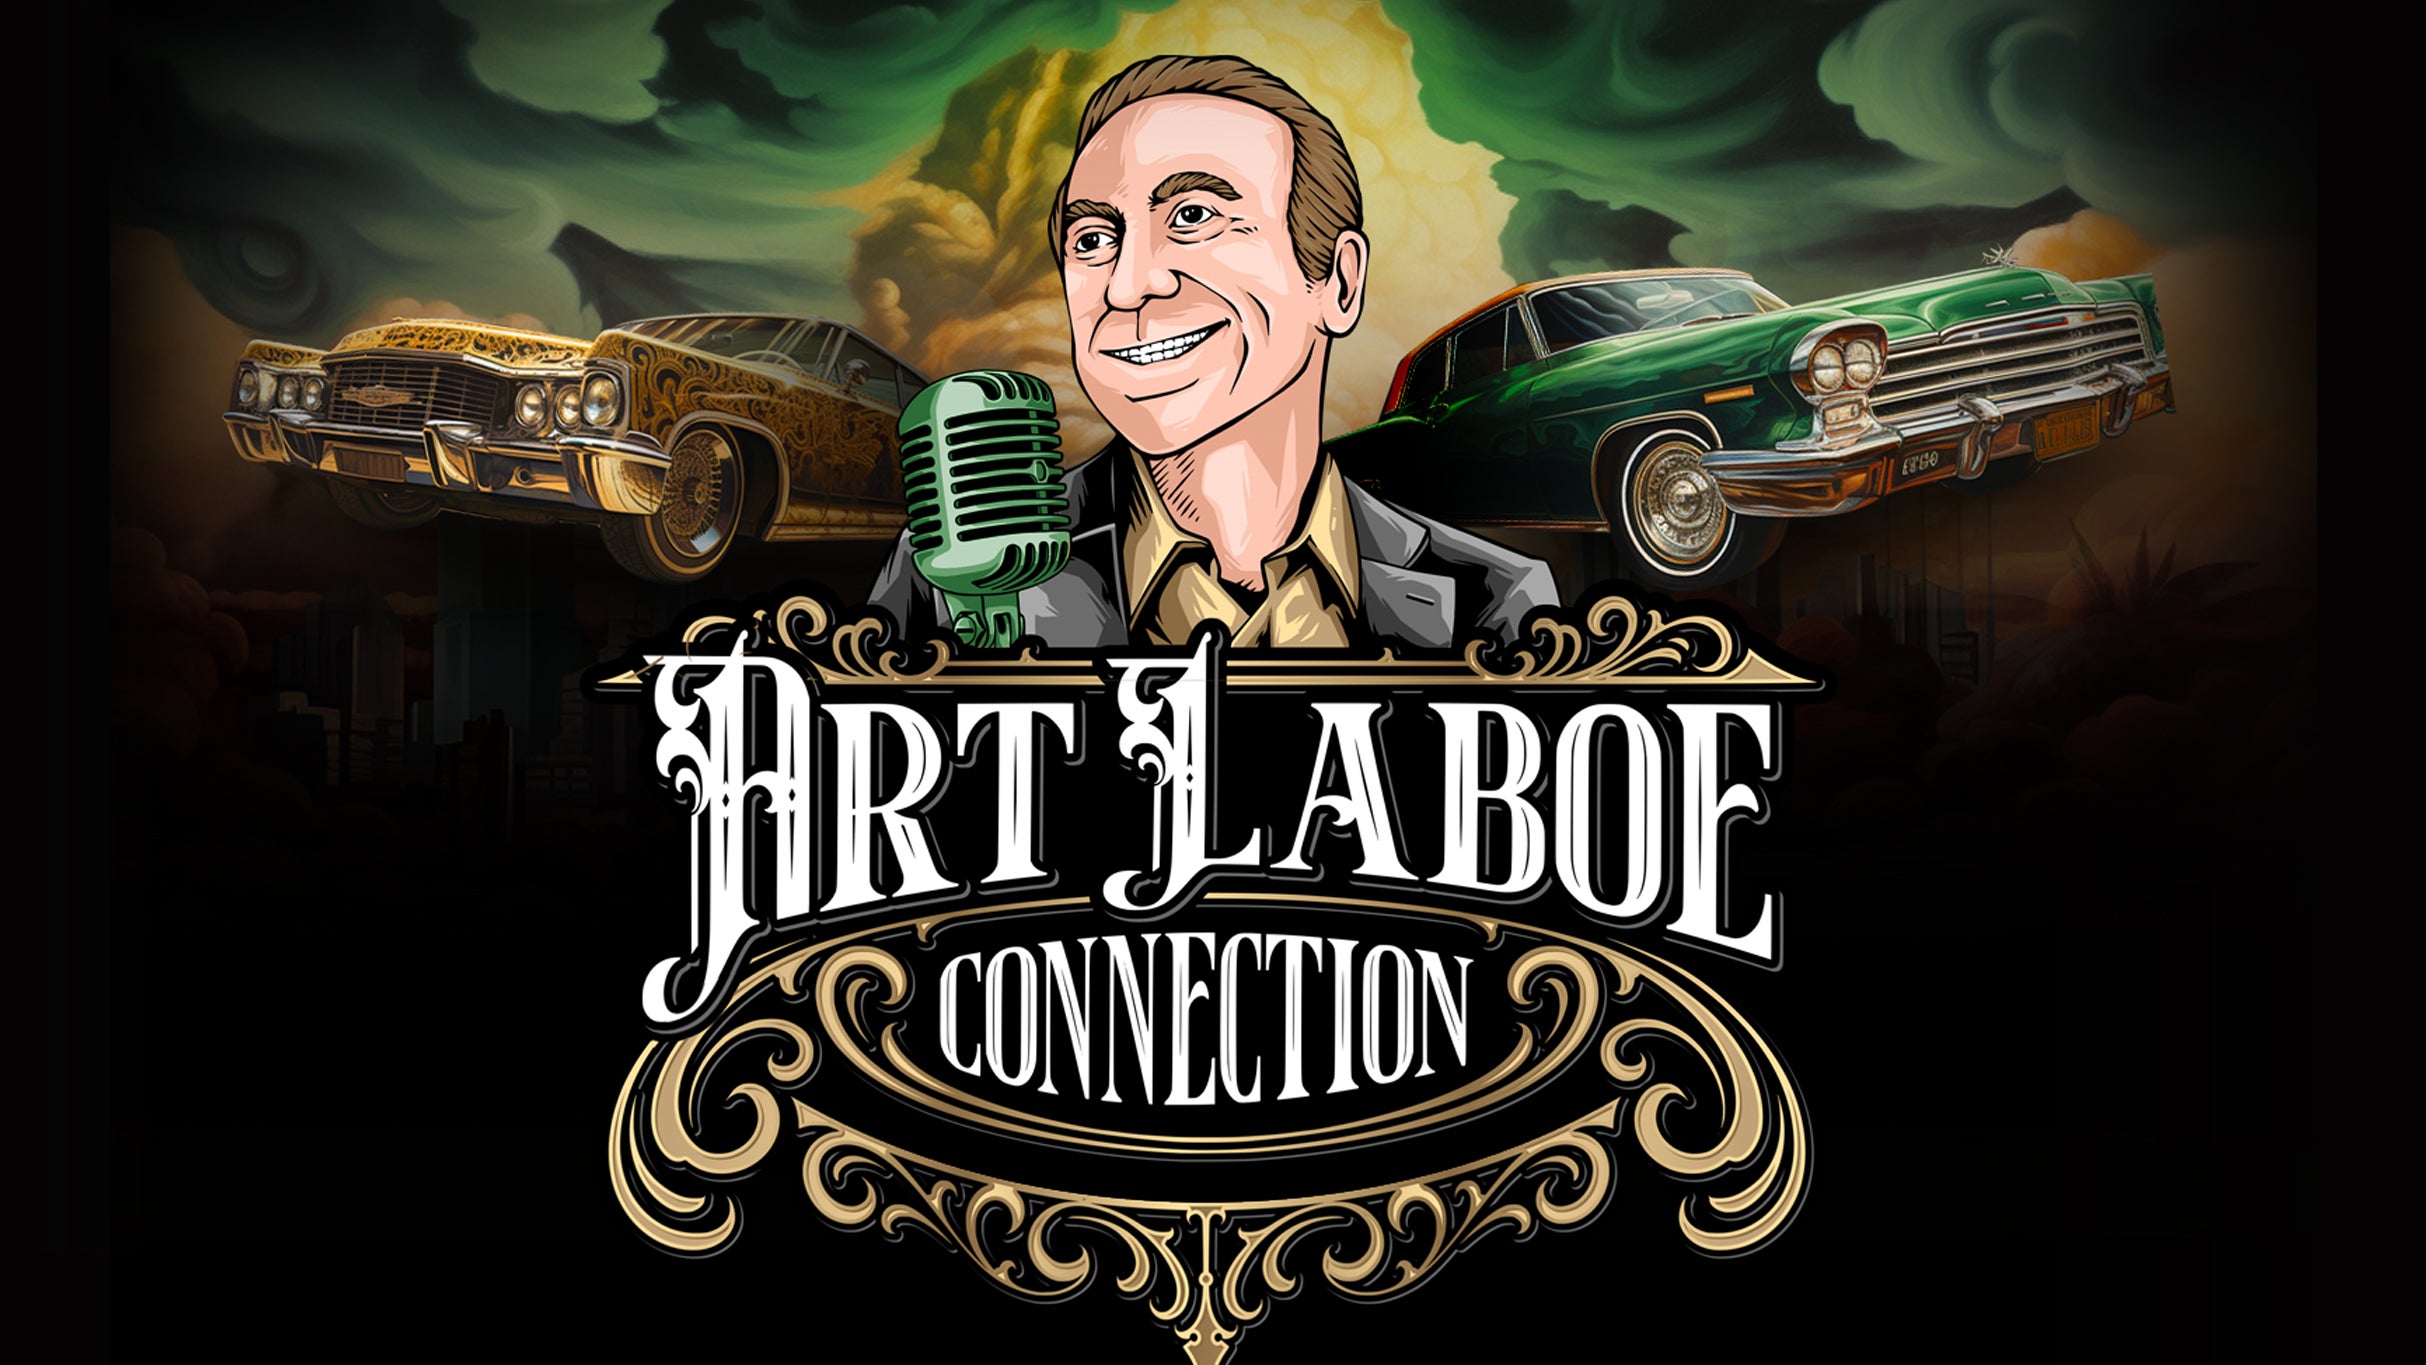 The Art Laboe Connection in San Bernardino promo photo for $35 presale offer code